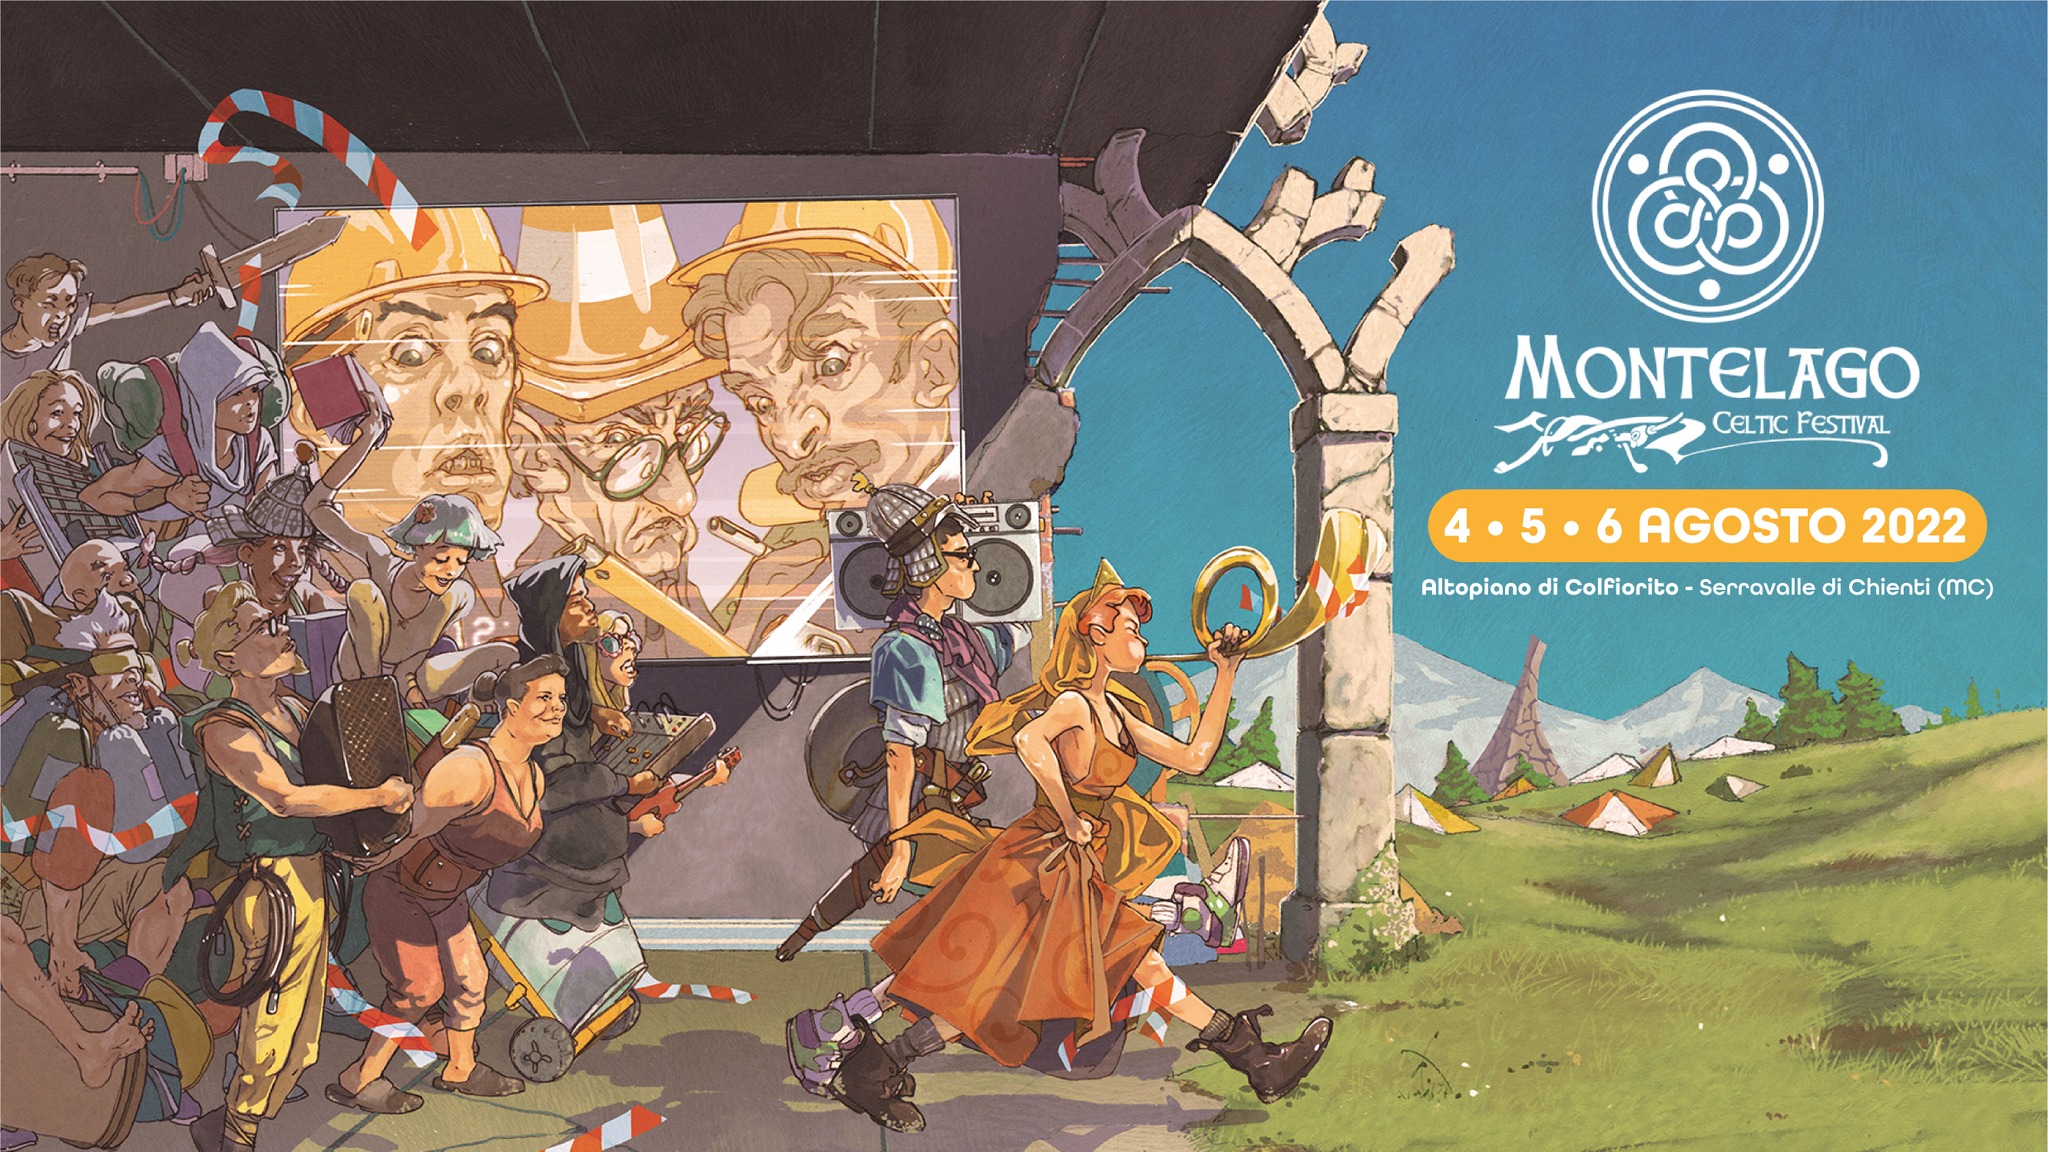 Montelago Celtic Festival XIX ed. dal 4 al 6 agosto 2022